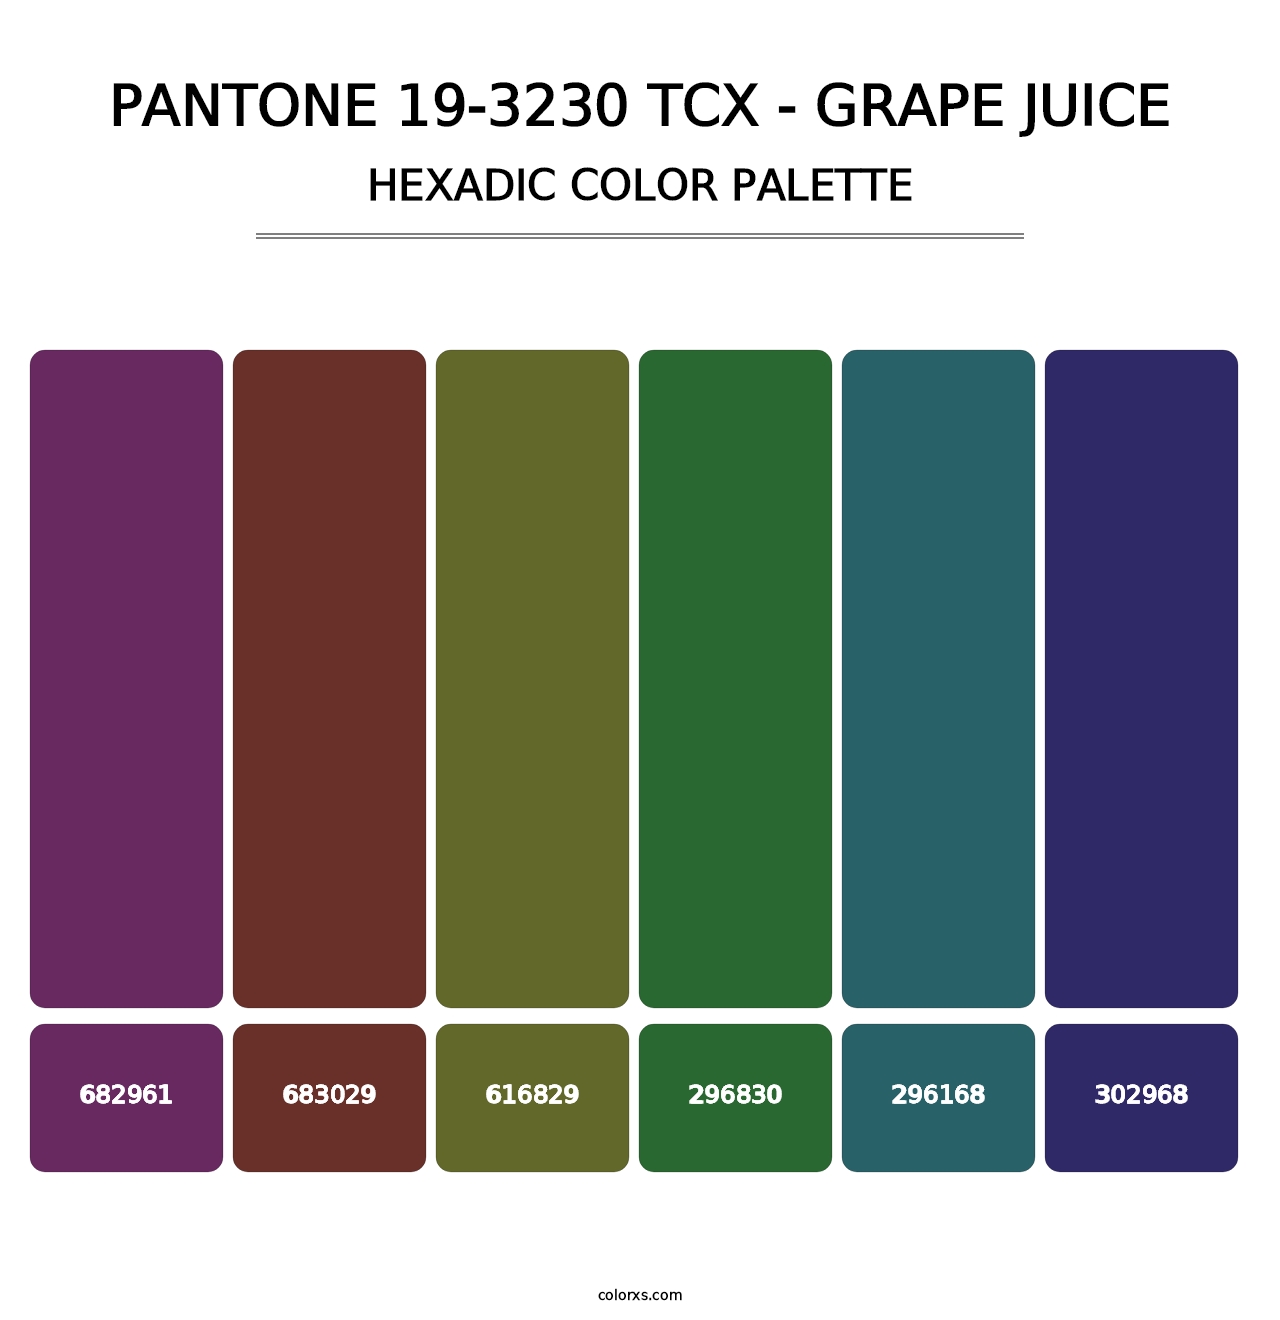 PANTONE 19-3230 TCX - Grape Juice - Hexadic Color Palette